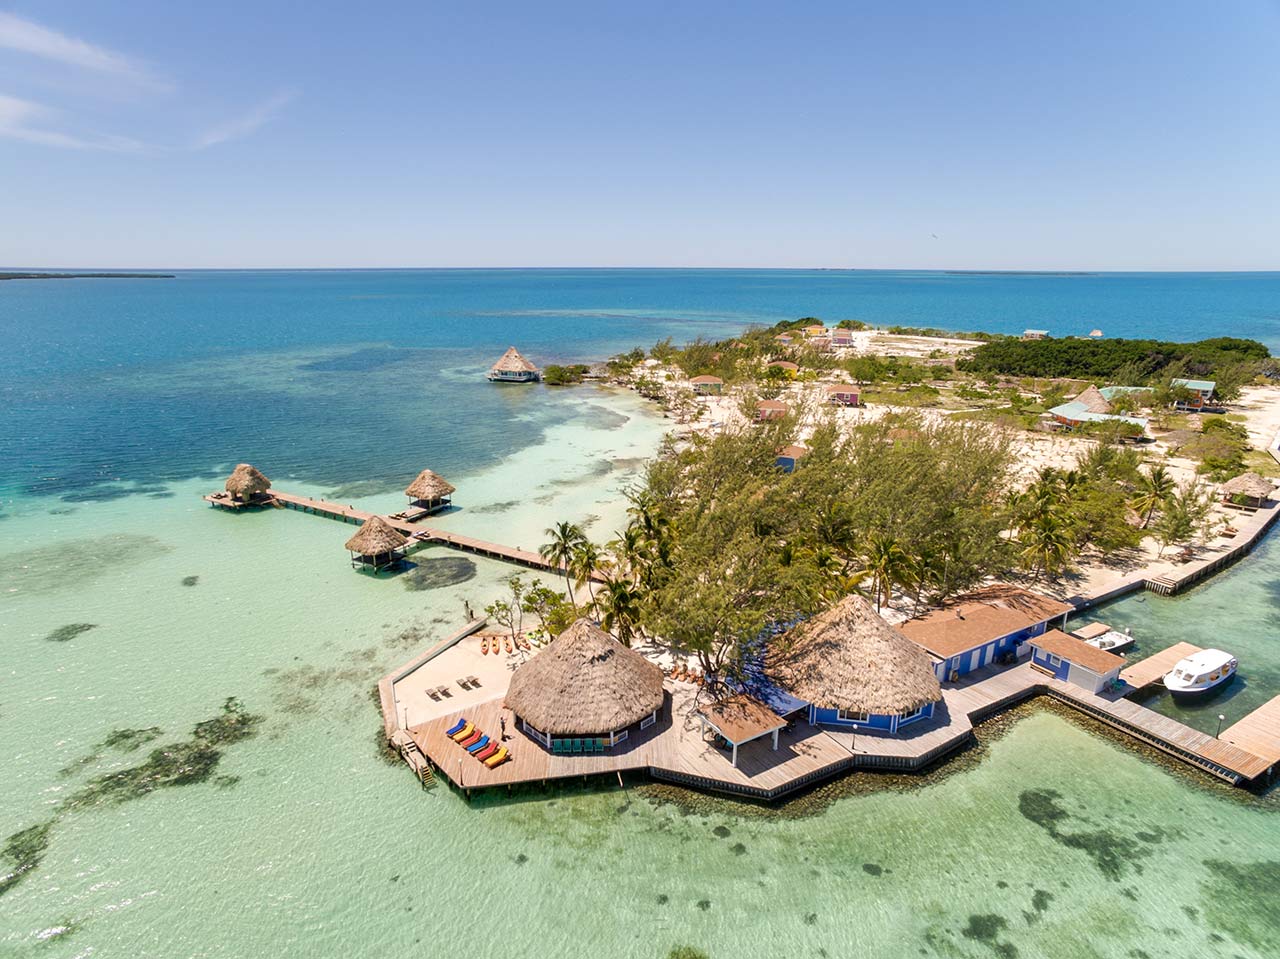 Belize Hotels and Beach Resorts: Coco Plum Island Resort